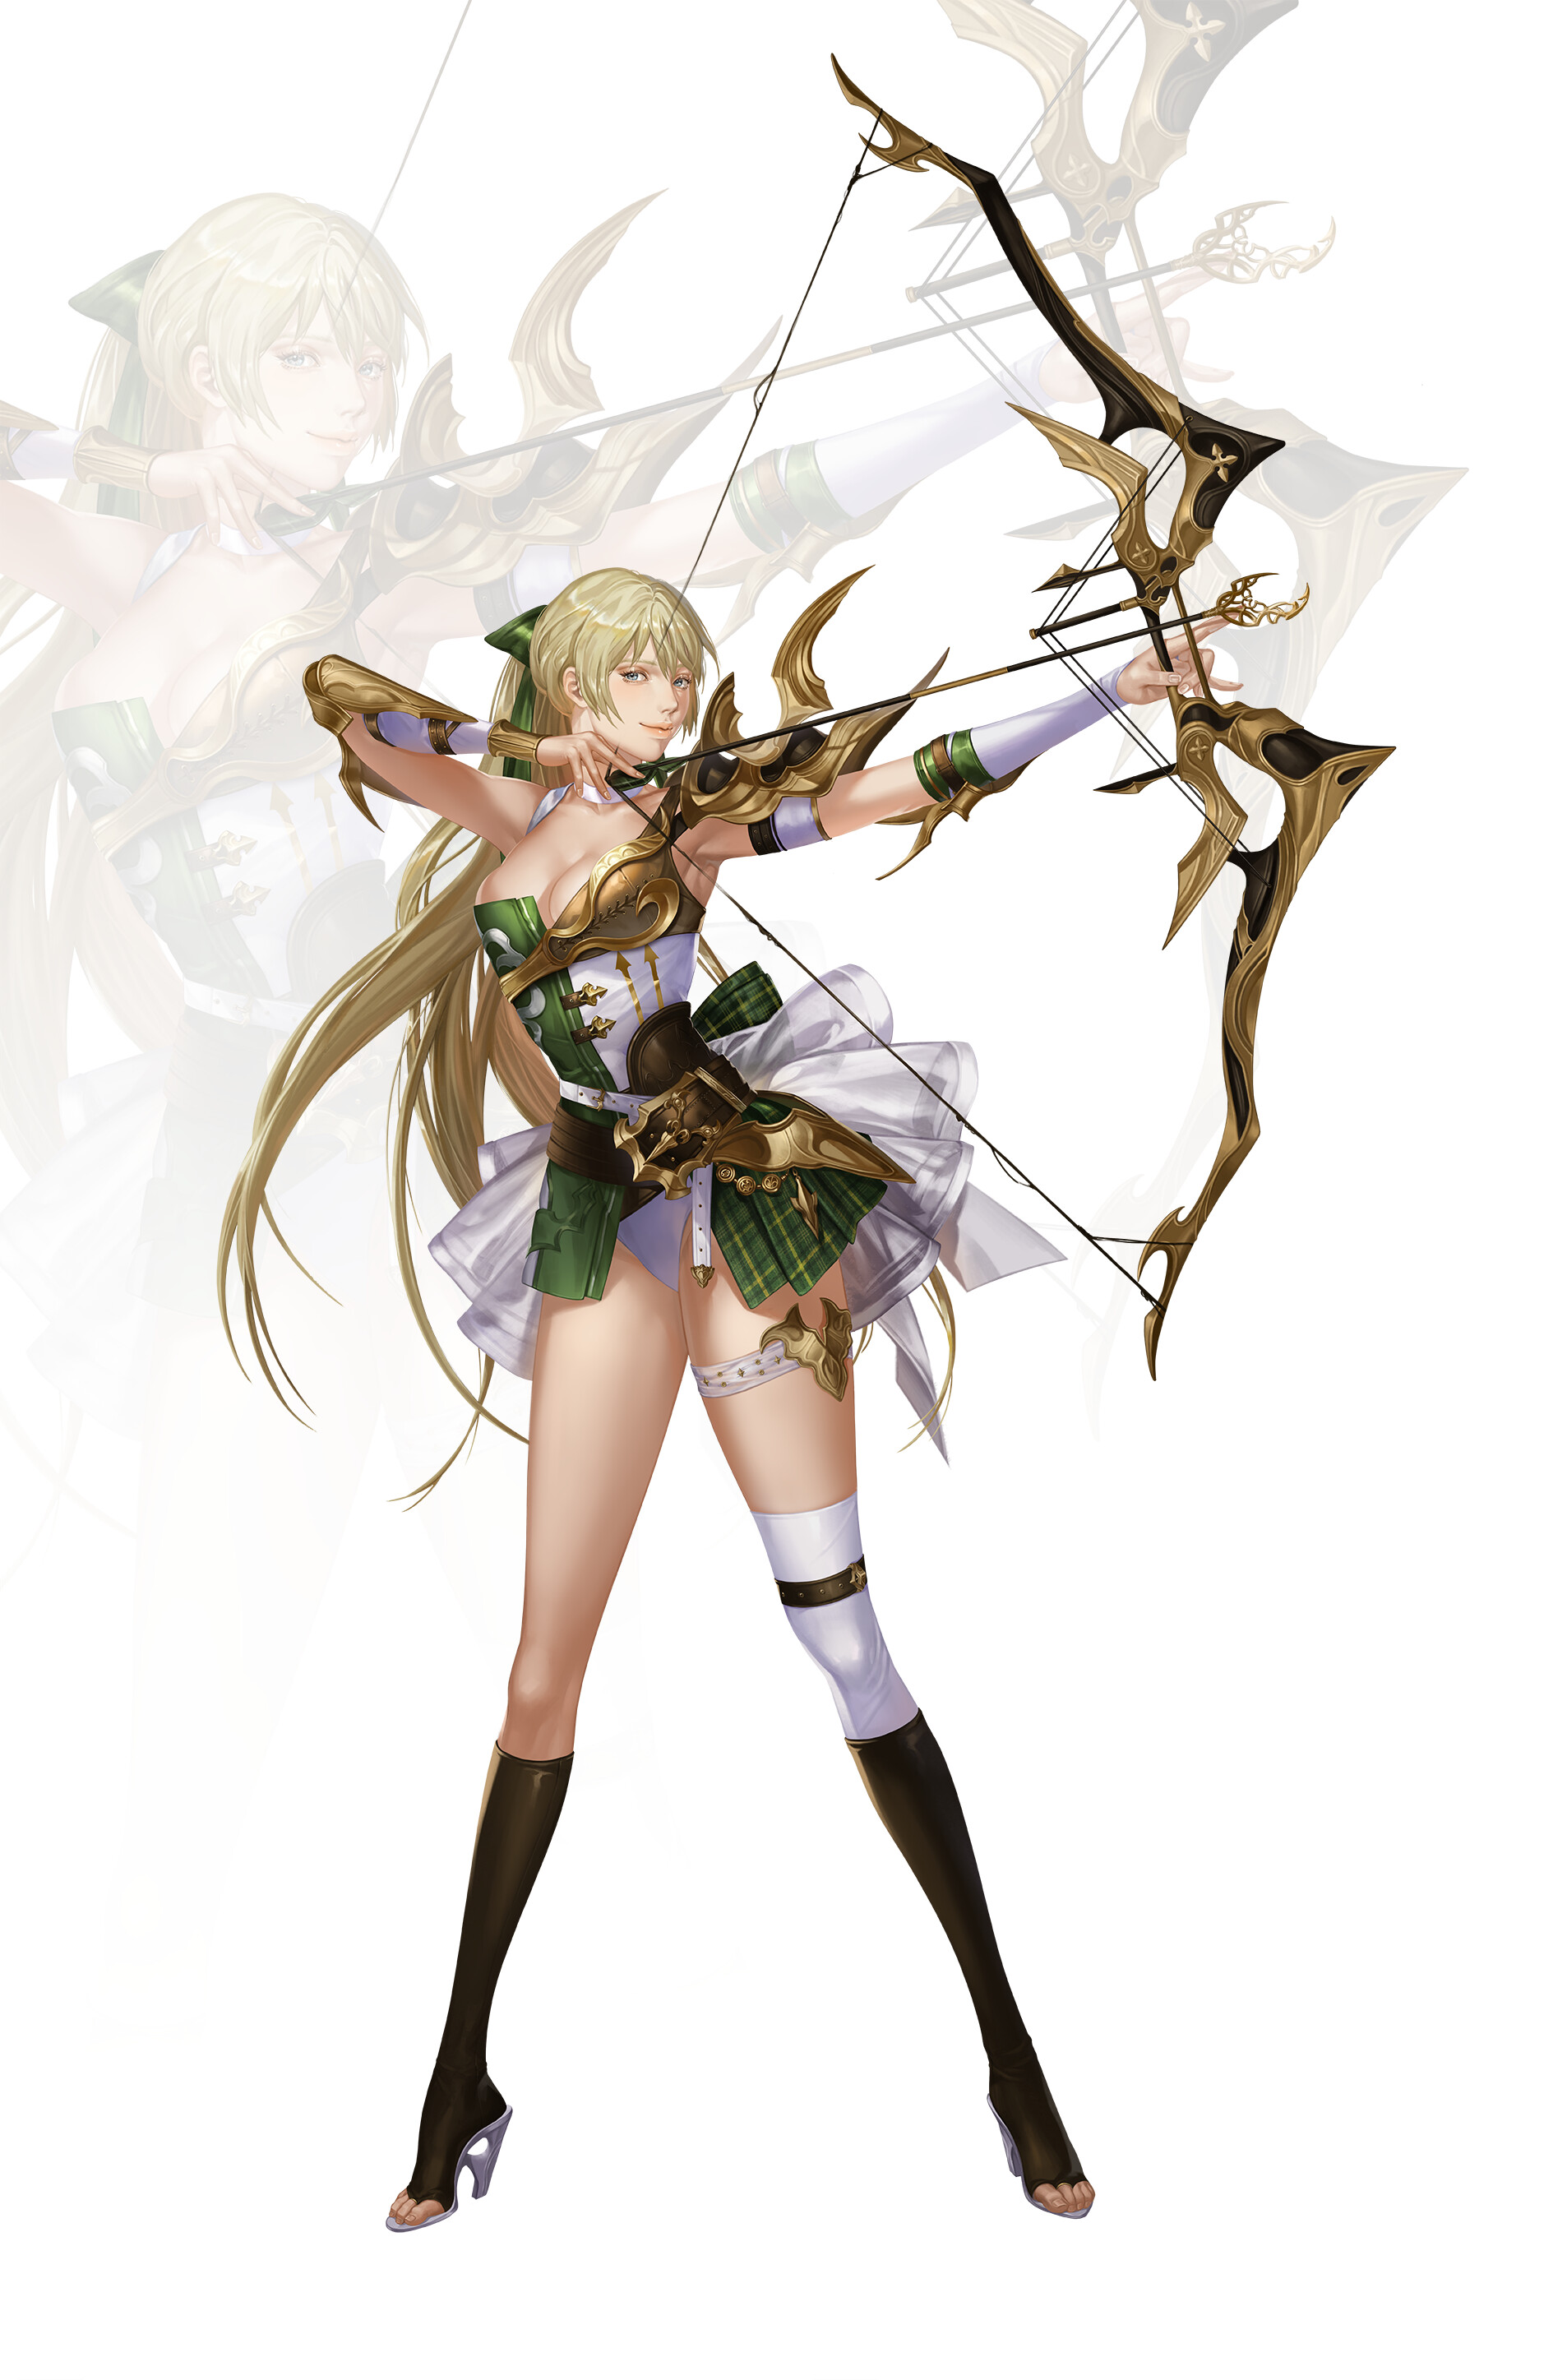 ByulRa 💕 - female archer character design